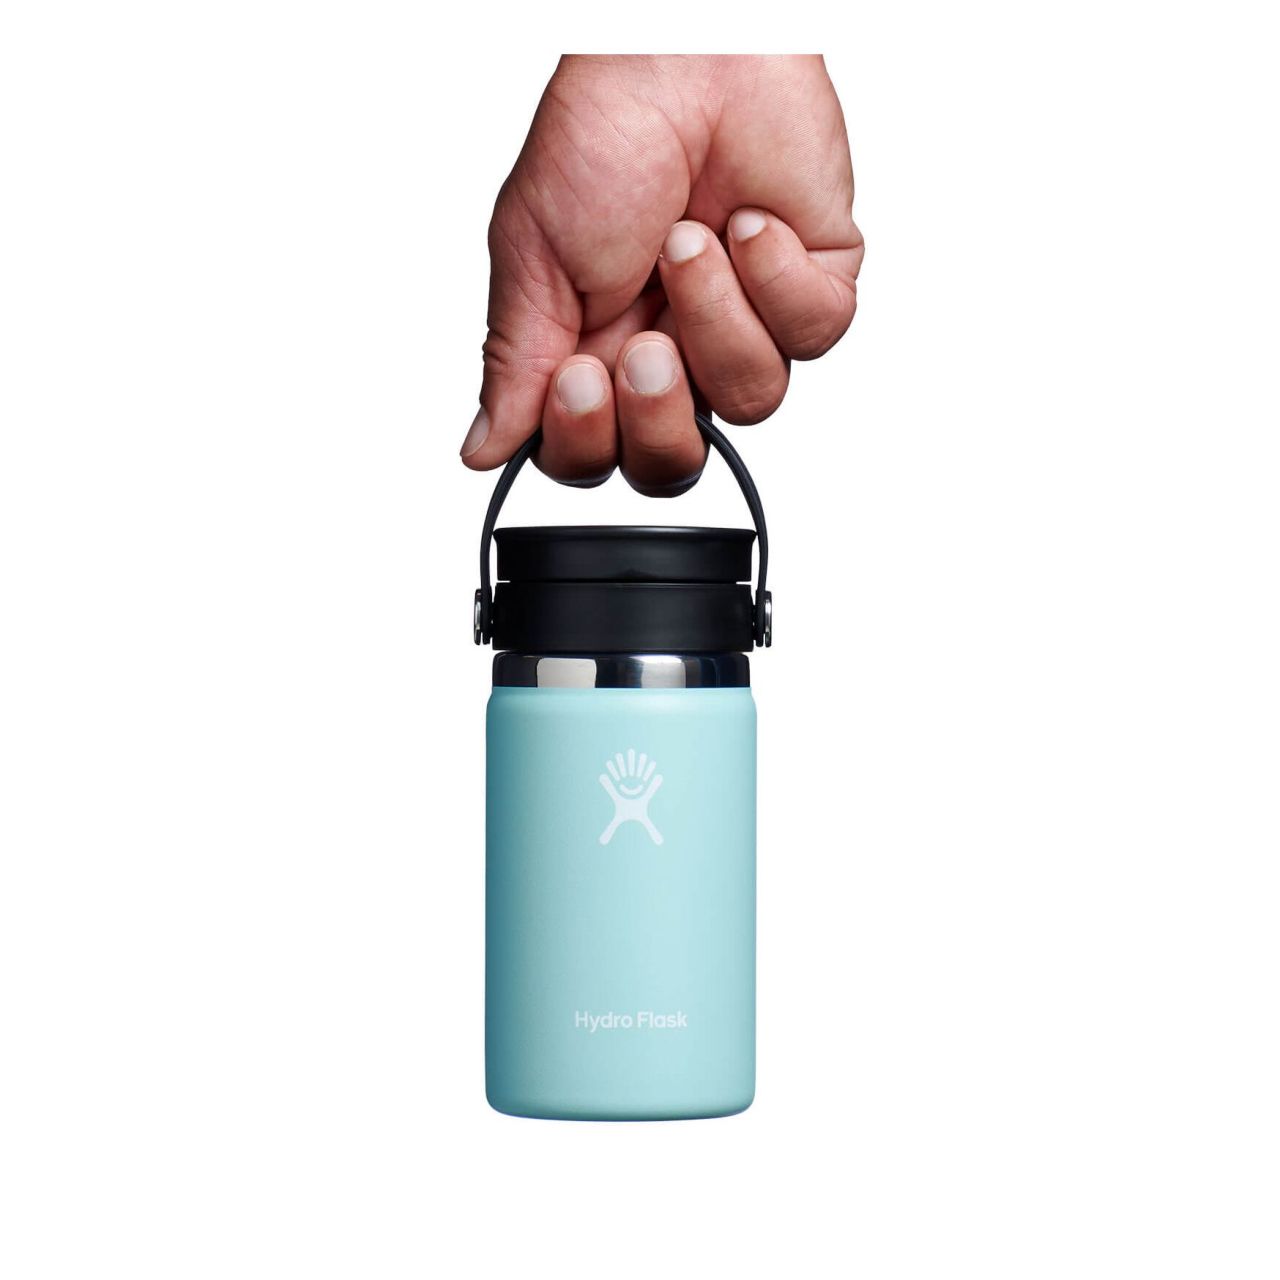 HYDRO FLASK - Travel Coffee Flask 354 ml (12 oz) - Vacuum